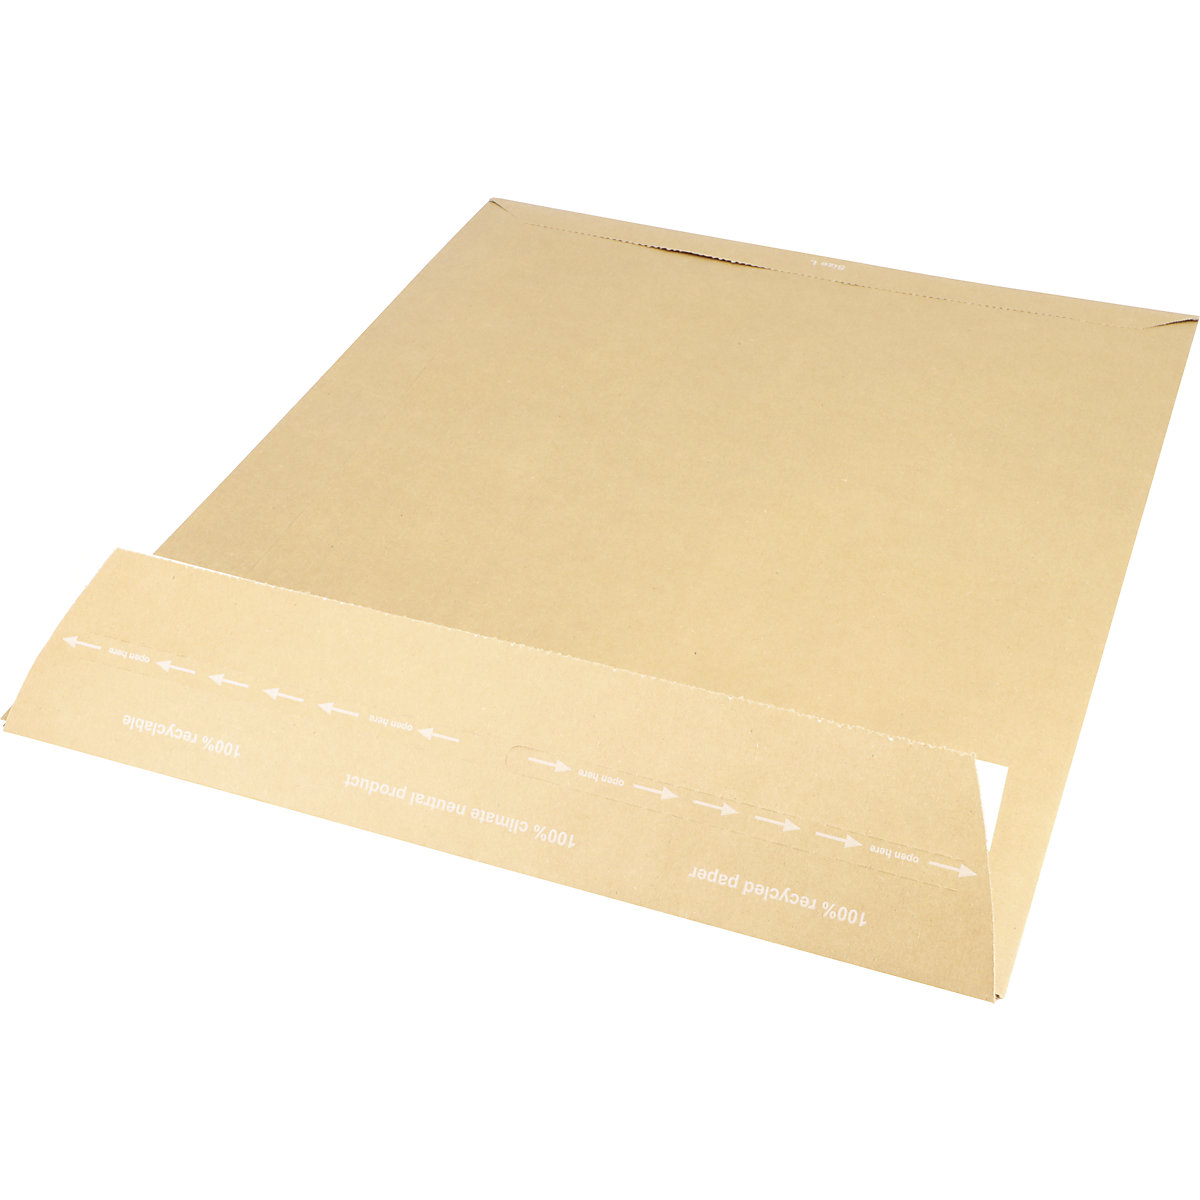 Versandtasche aus Papier E-Commerce terra, retourengeeignet, LxB 480 x 380 mm, VE 200 Stk, ab 5 VE-1